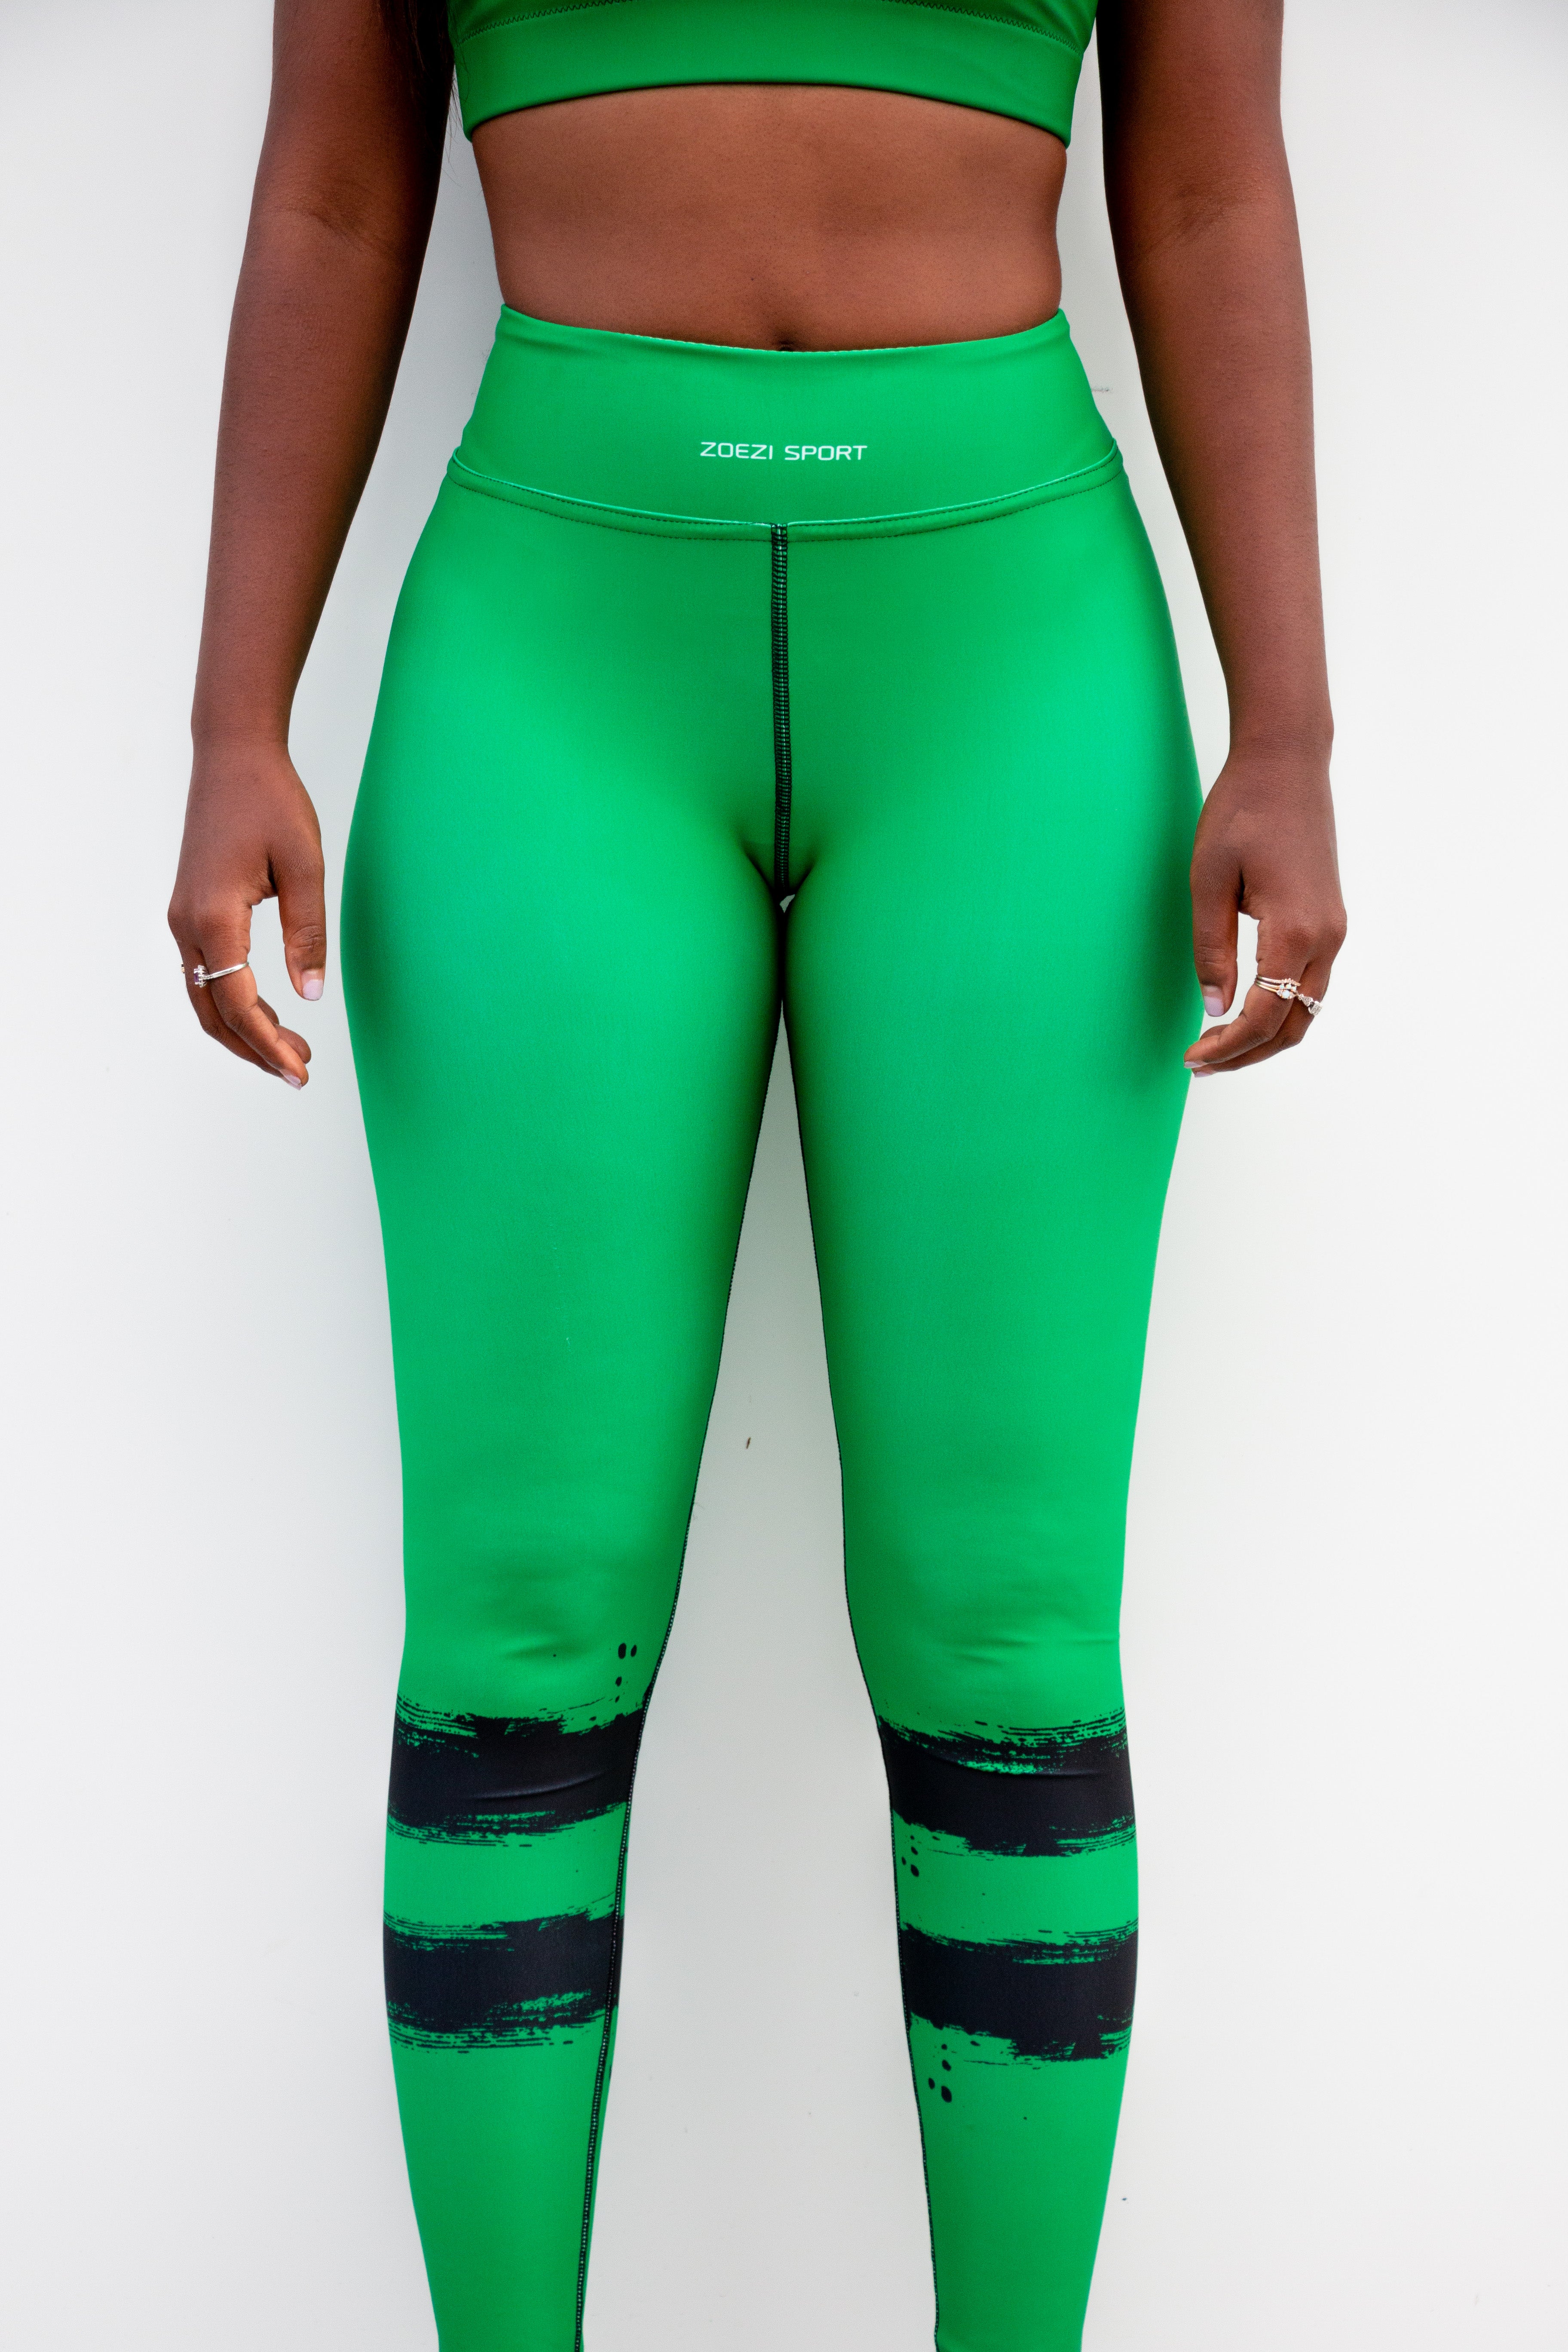 Khaki Deep Green Squatproof Leggings Yoga Pants Opaque Gym Dance Aerial  Pole Running Active Gymwear Pilates Sports Sculpting Activewear 